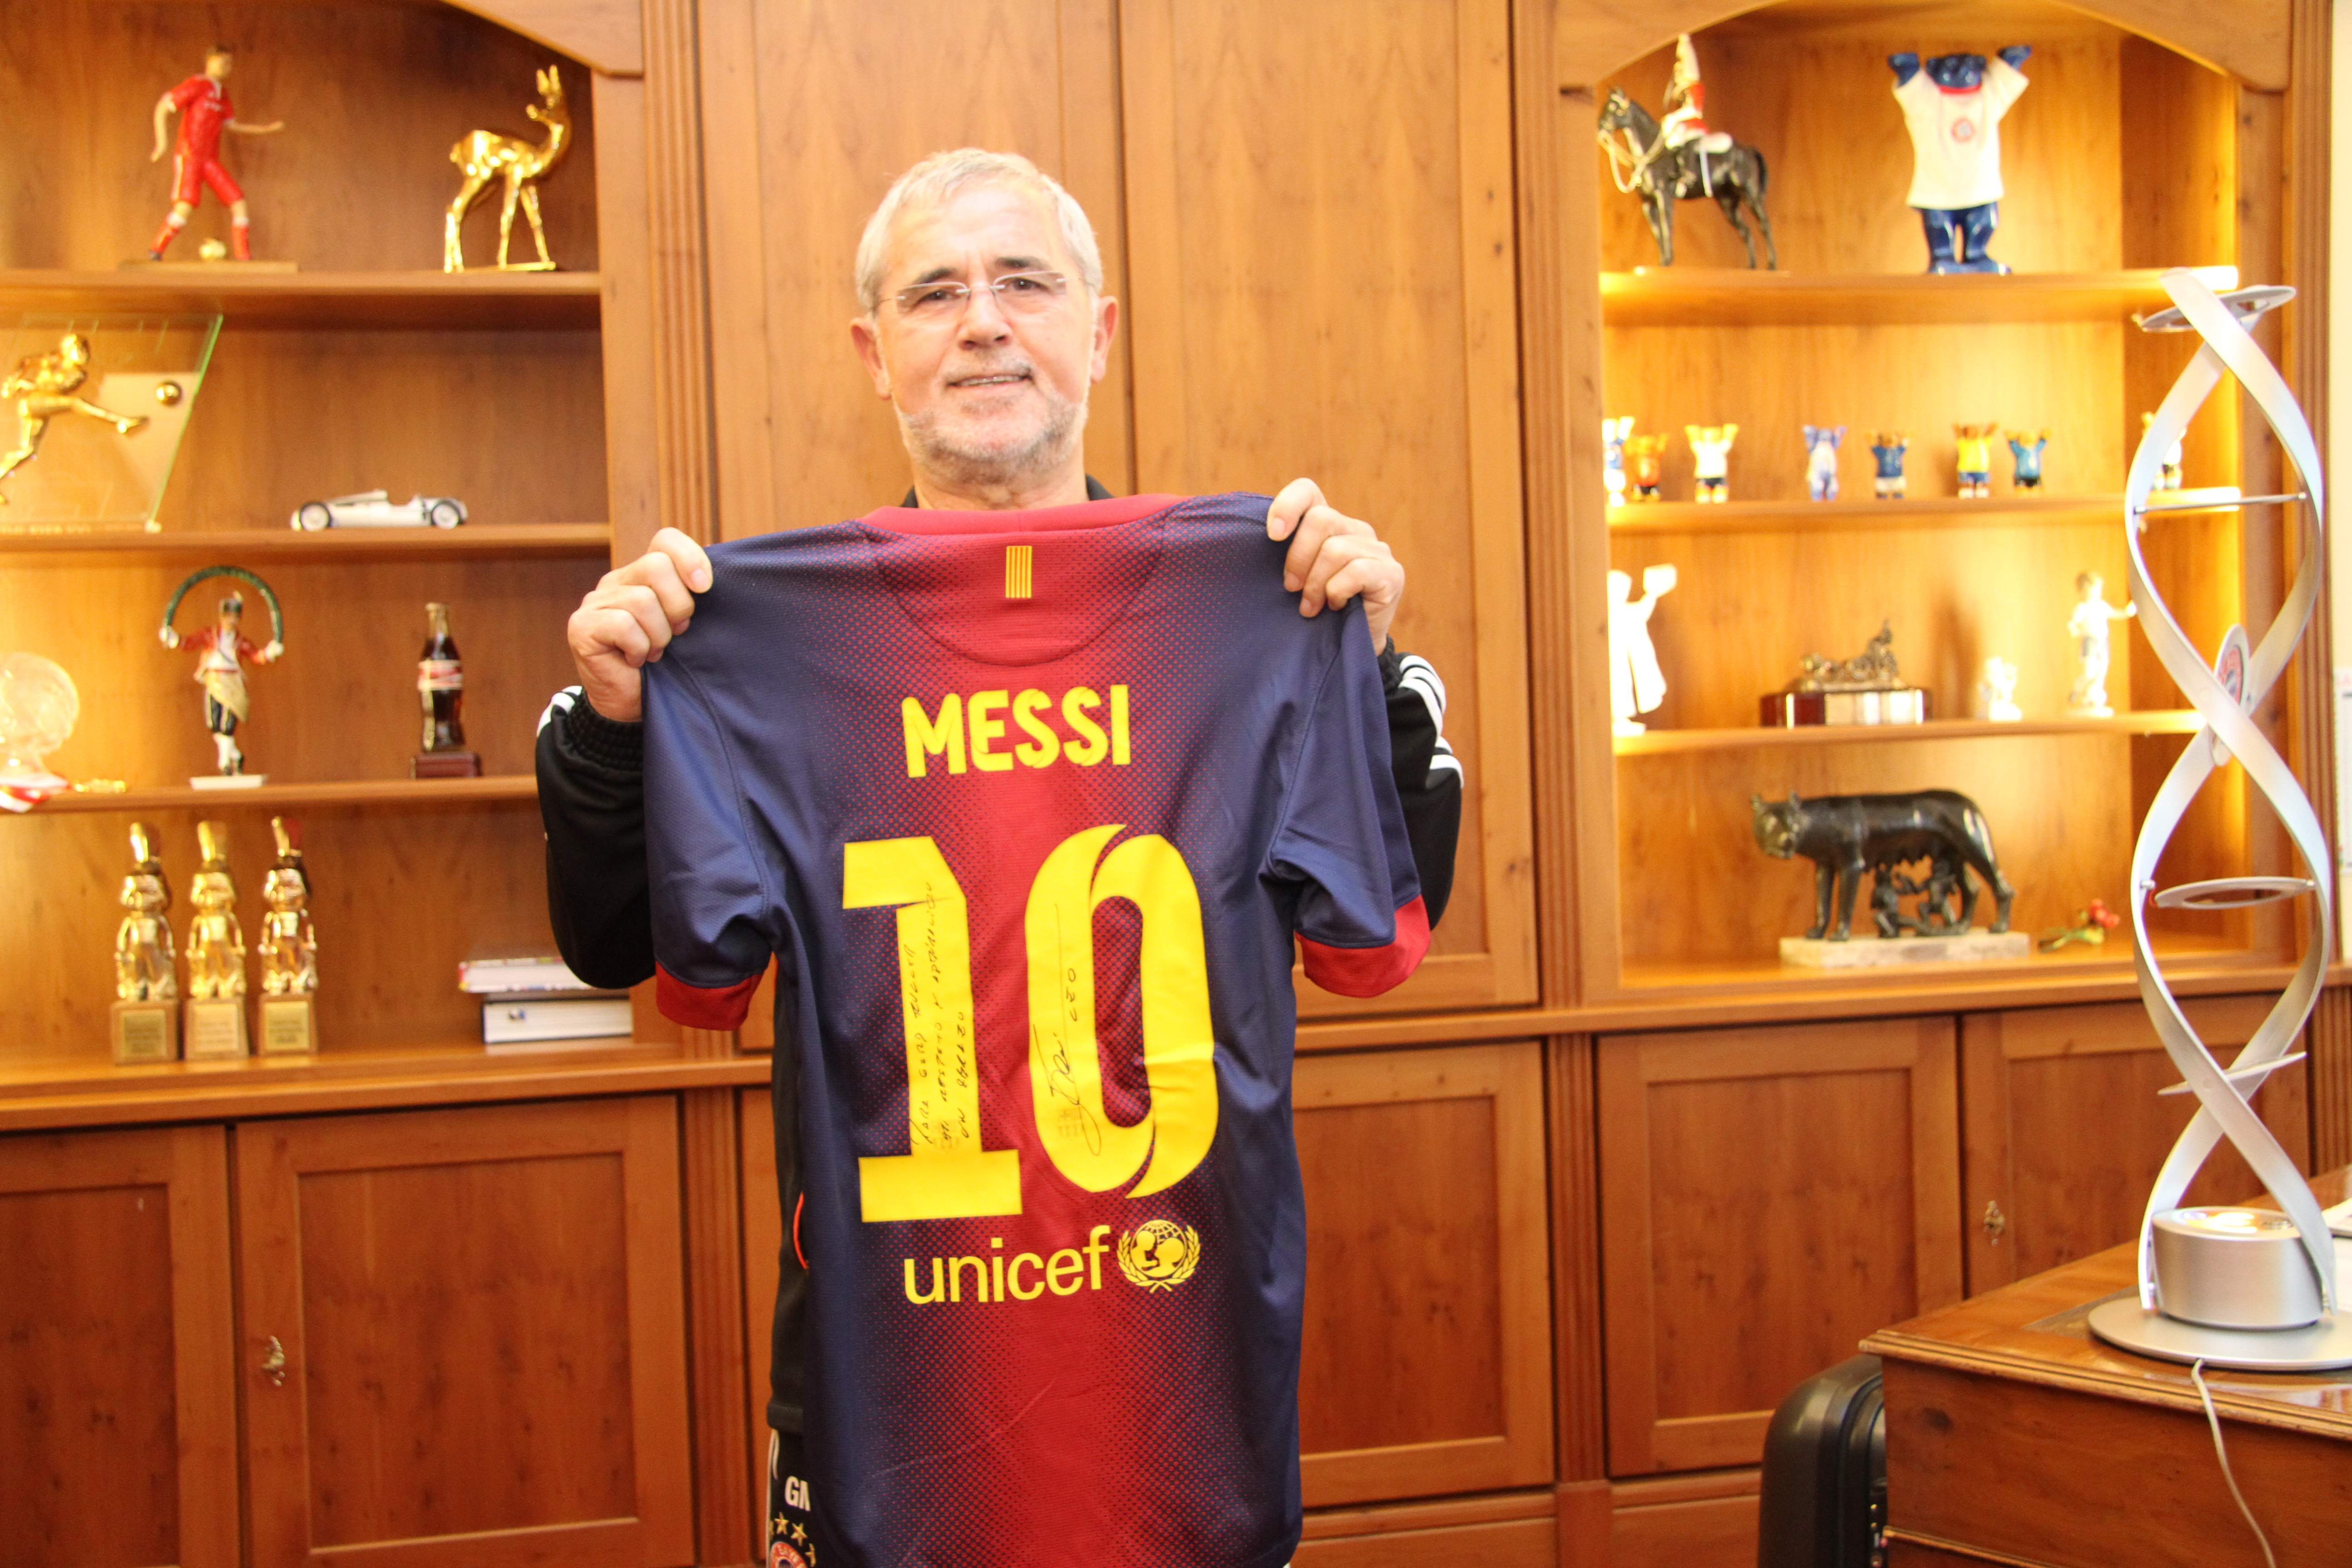 Margaret Mitchell Siden Kakadu Gerd Müller receives Leo Messi's jersey